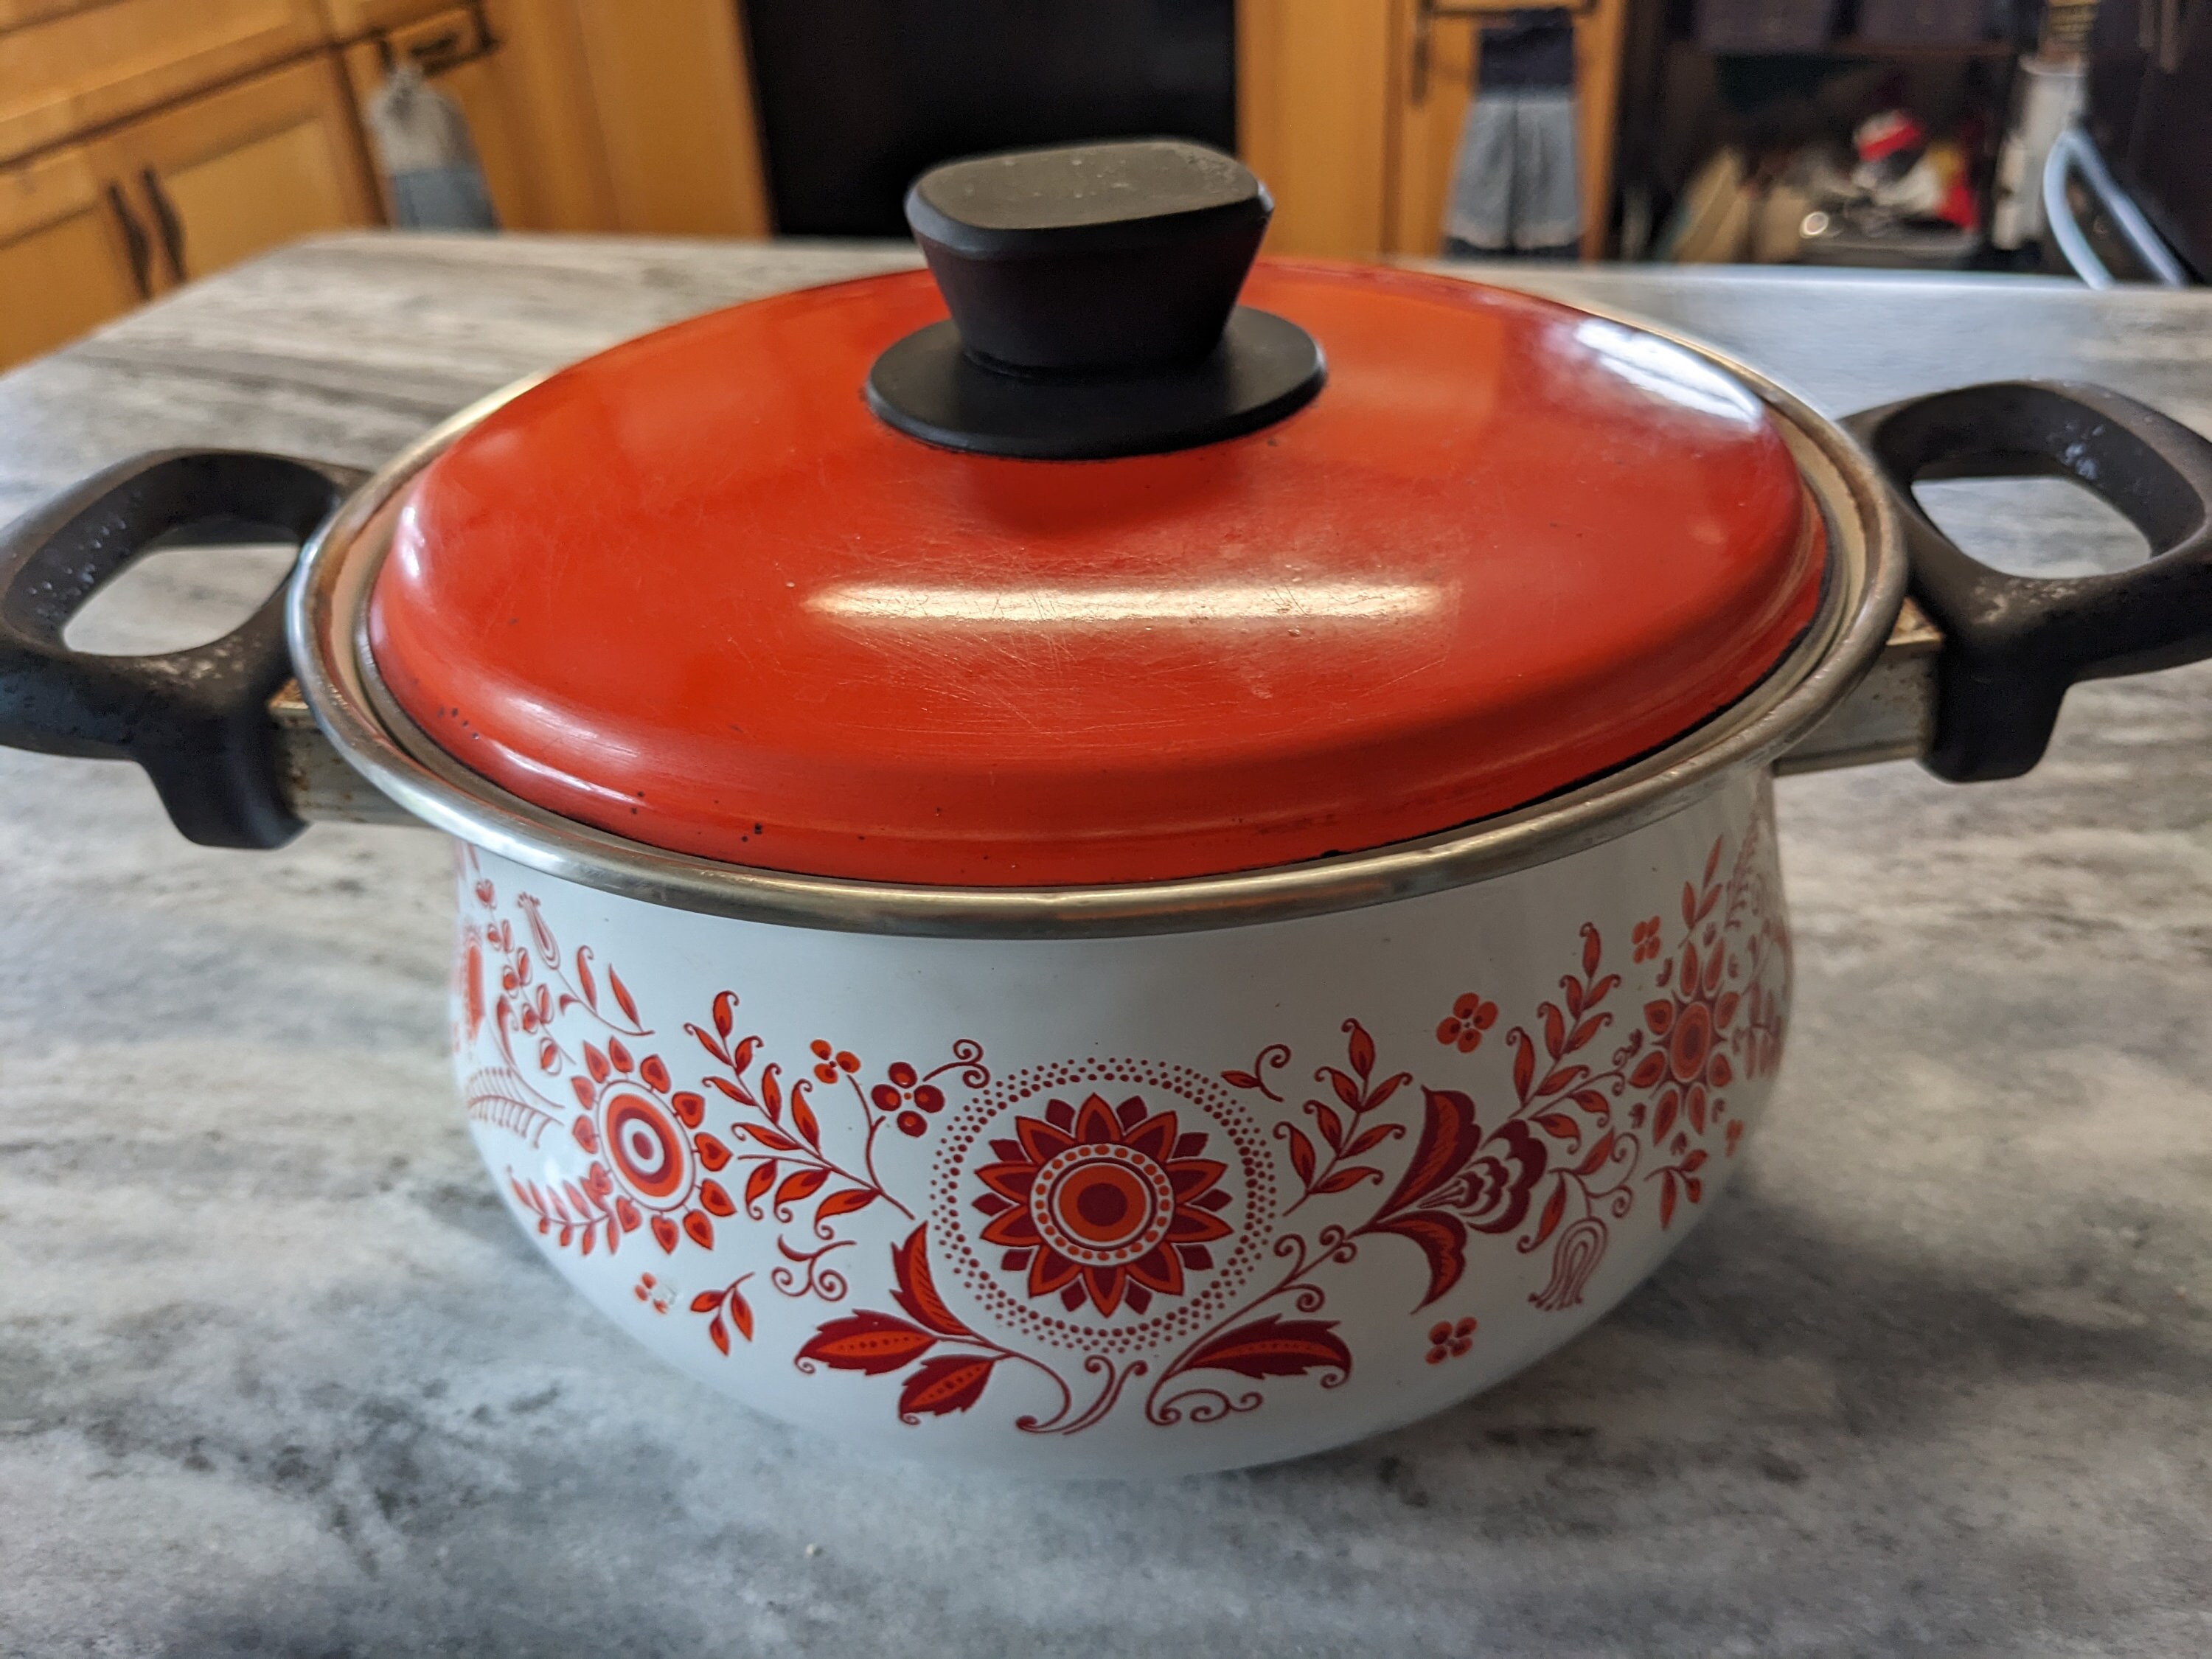 Vintage Casron Cast Iron Cookware Made in Japan - Set of 8